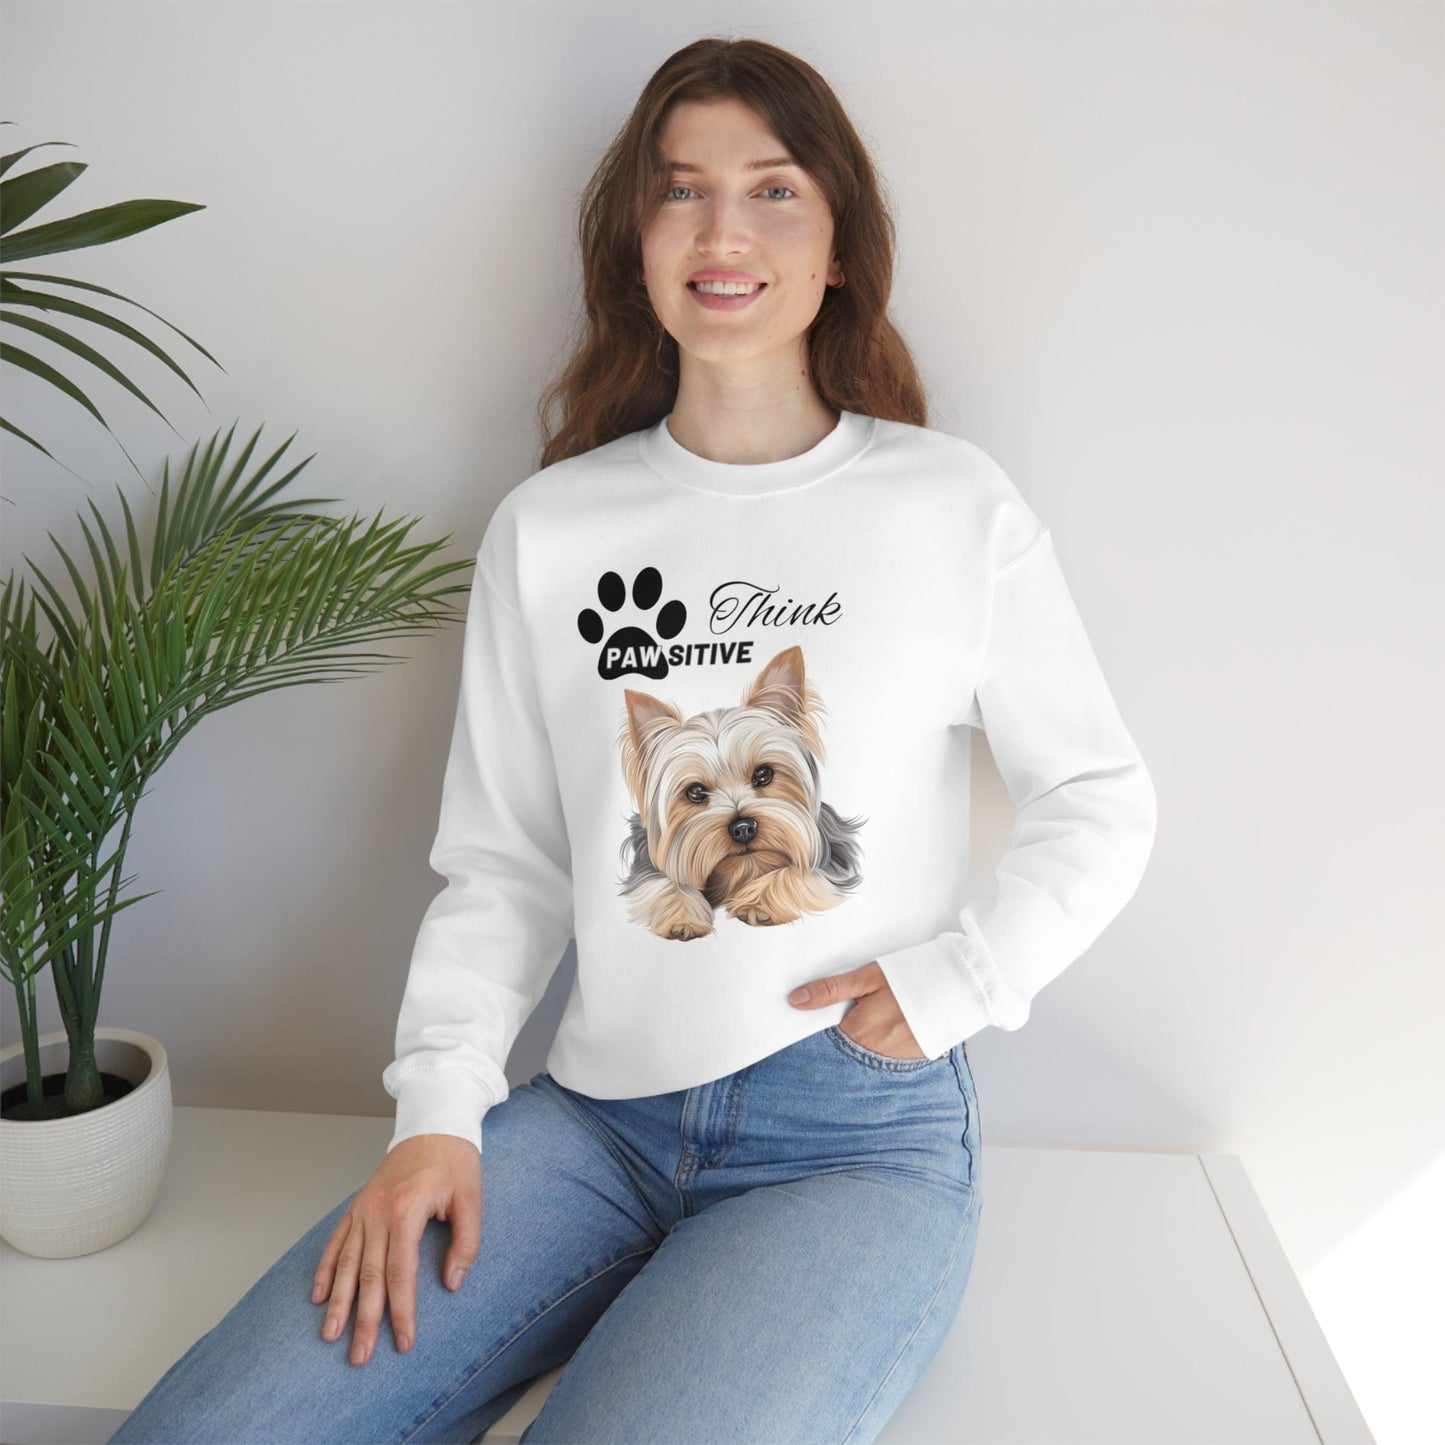 Cute Yorkie Dog Mom Sweatshirt, Gift For Yorkshire Terrier Lovers